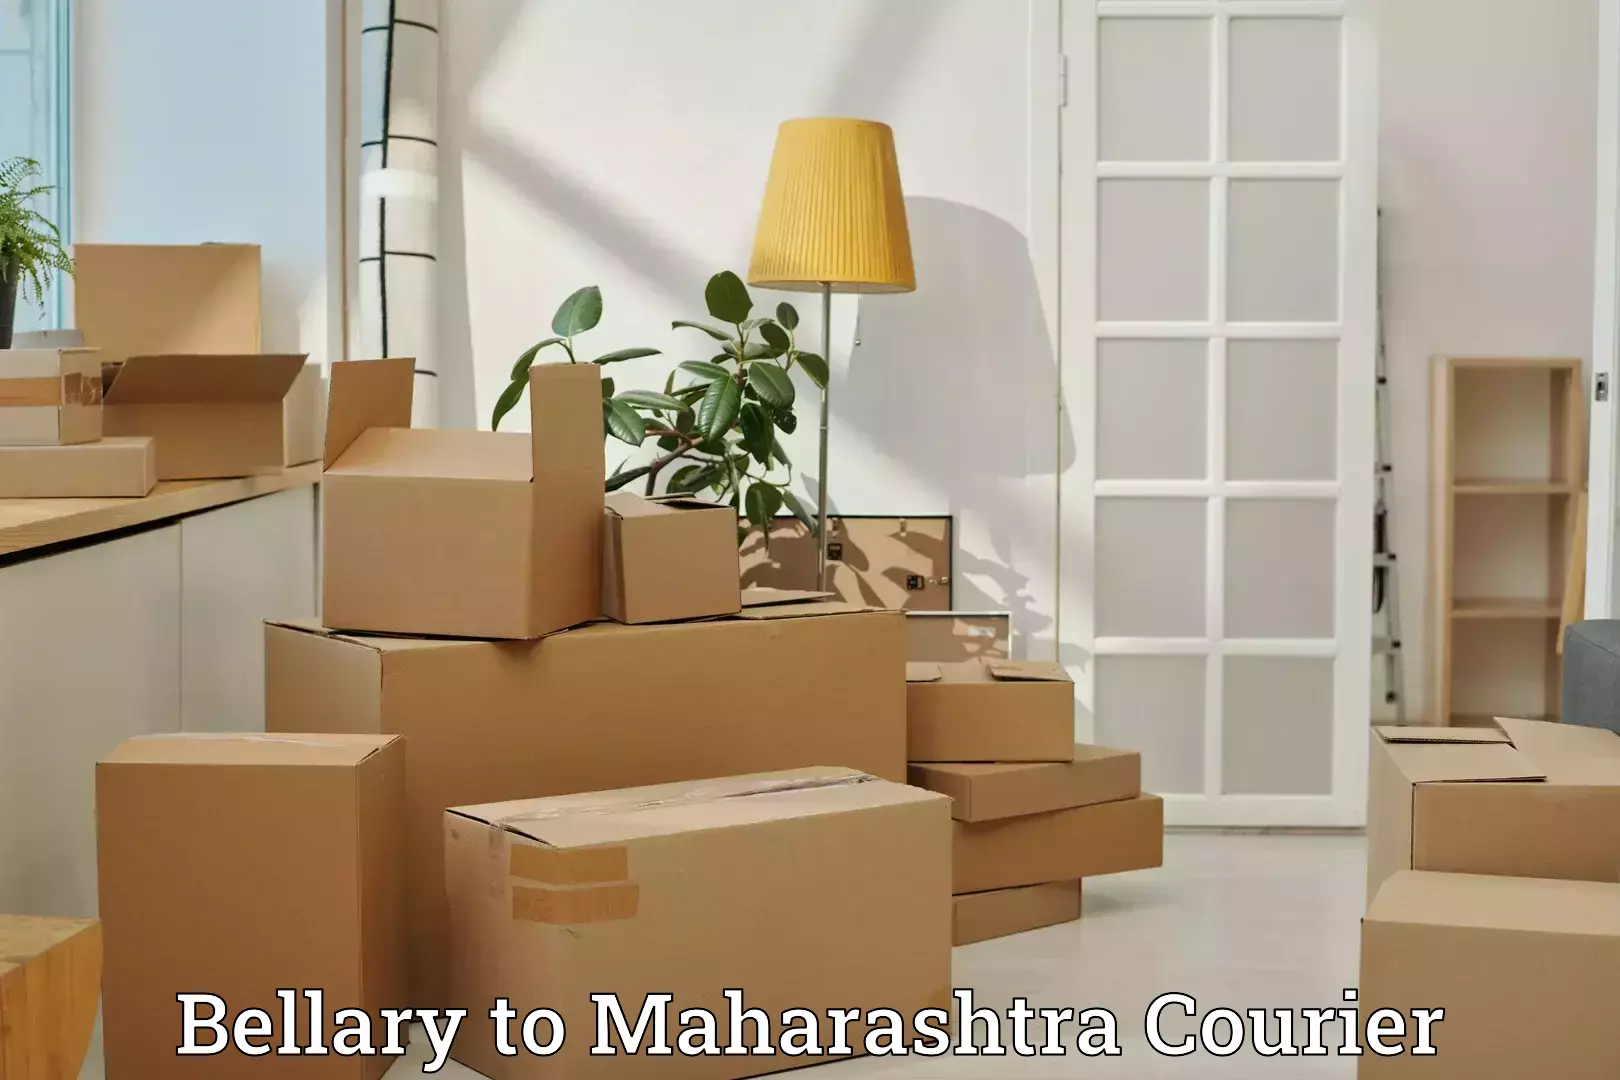 Luggage shipment specialists Bellary to Maharashtra